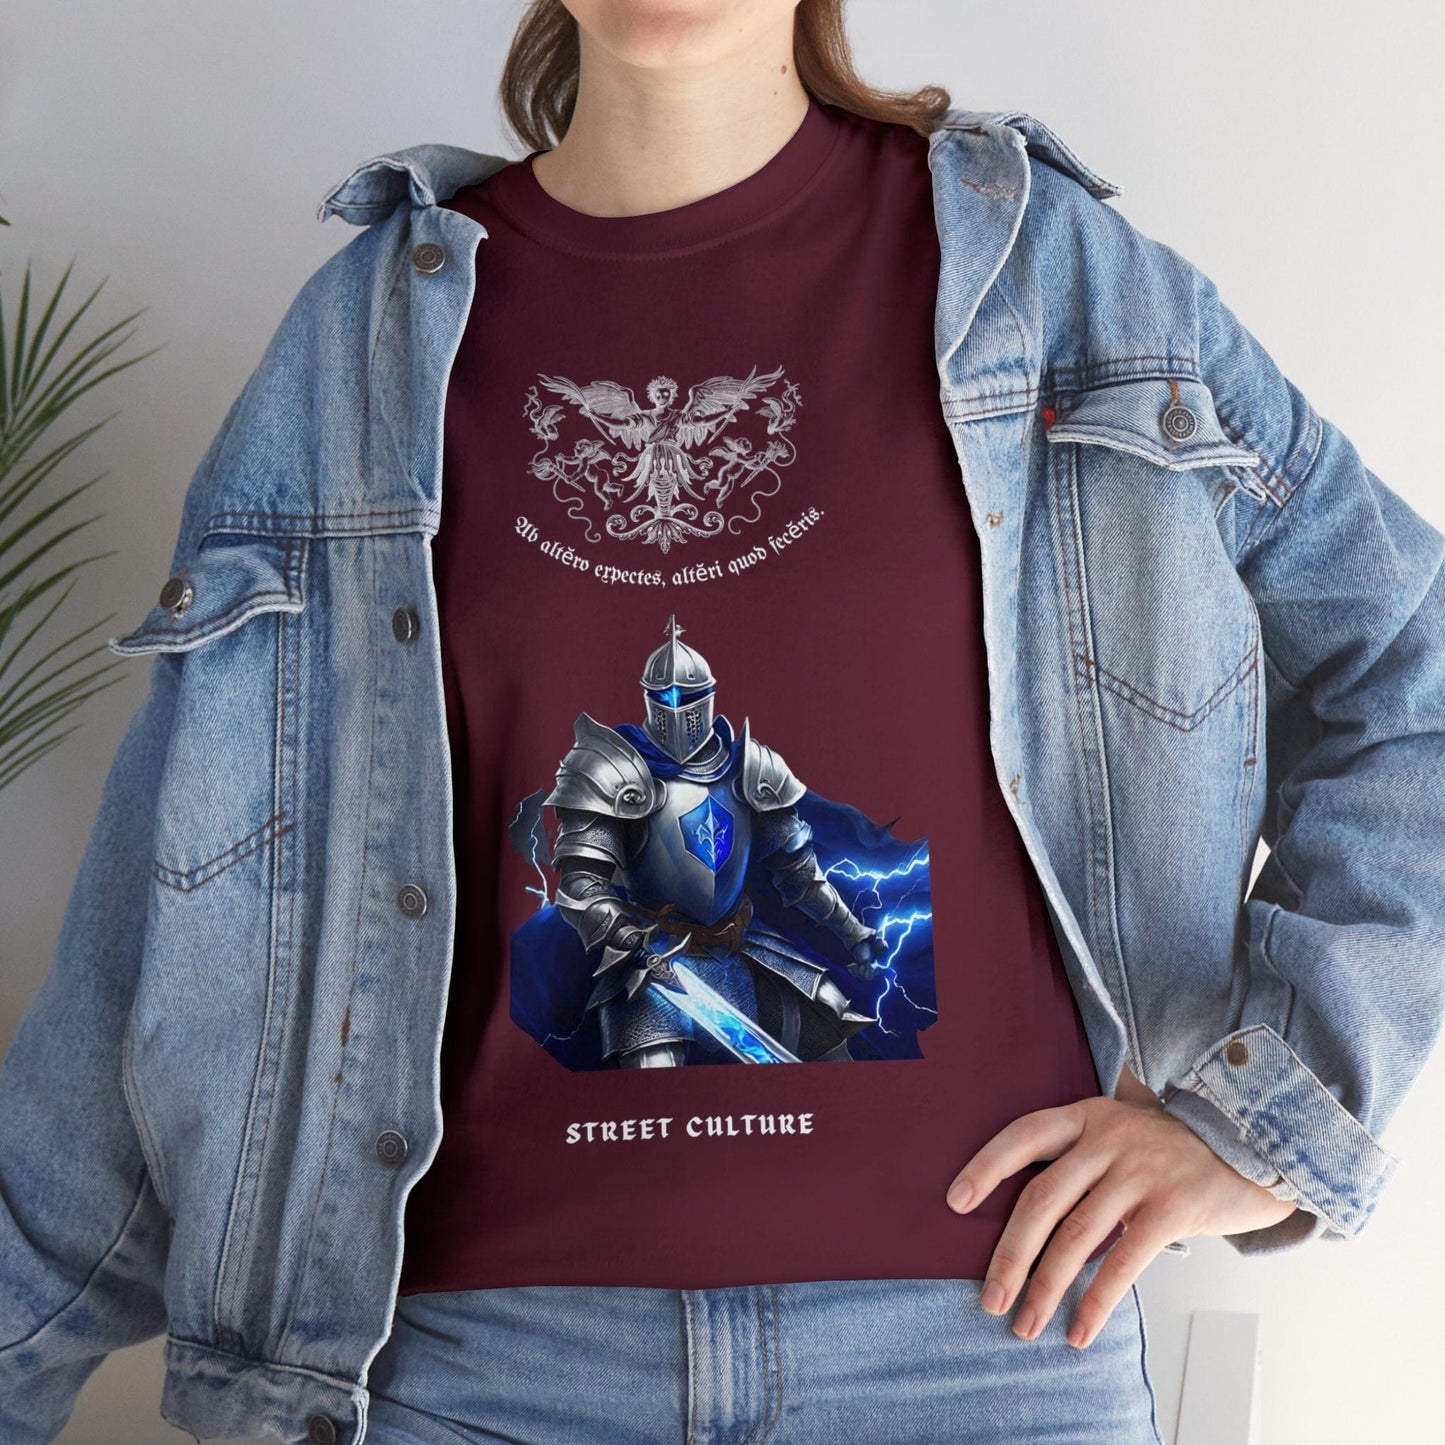 Caballero Templario con Camiseta Thunderblade Flashlander